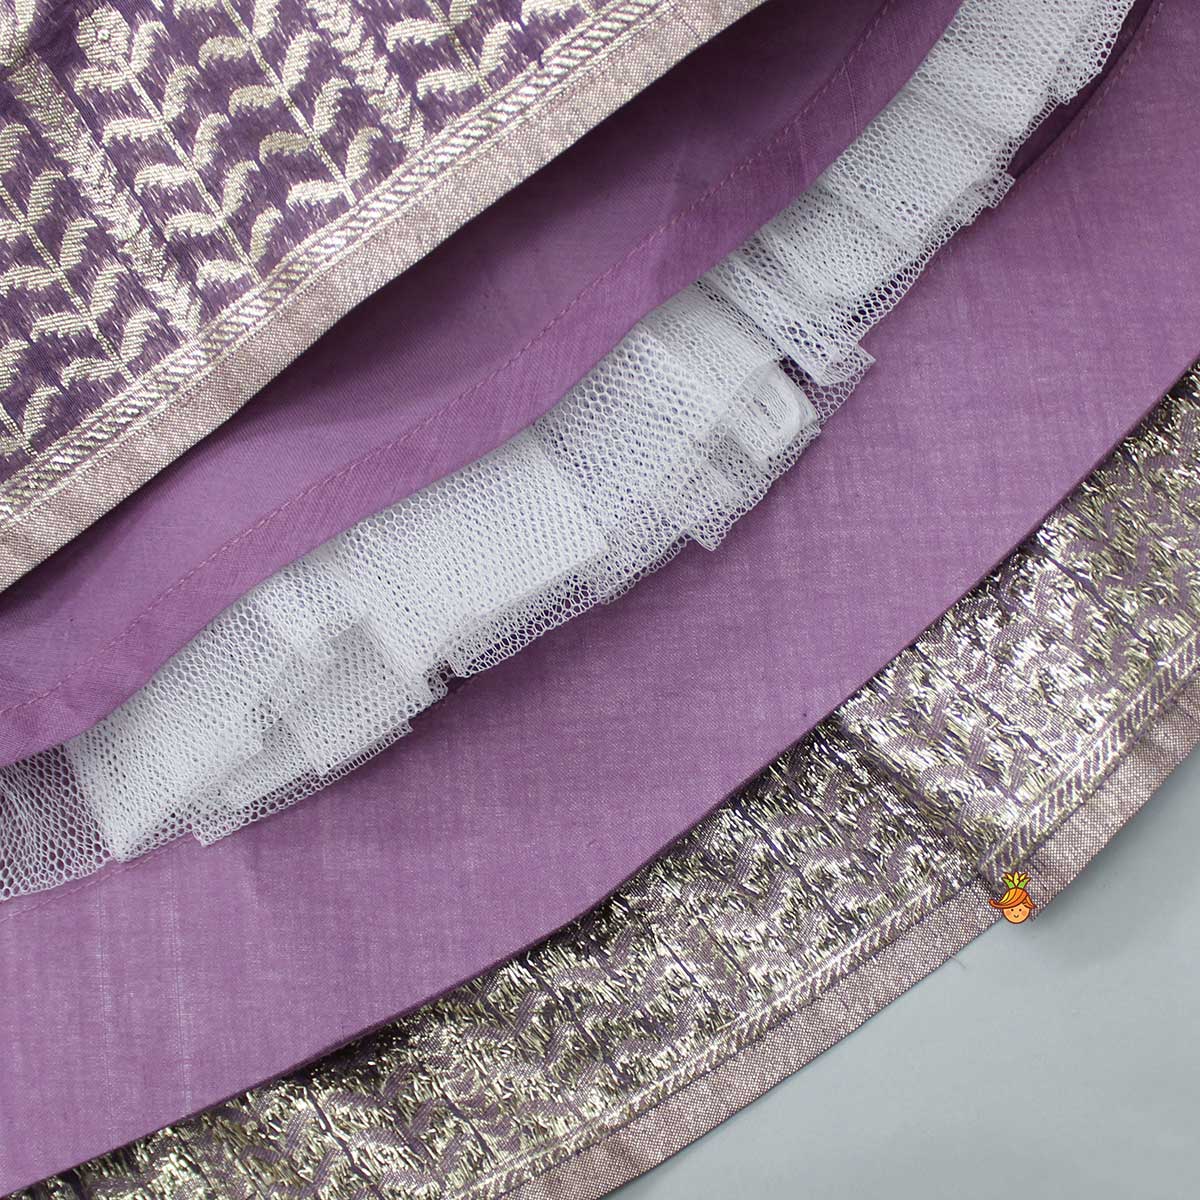 Brocade Embroidered Purple Top And Lehenga